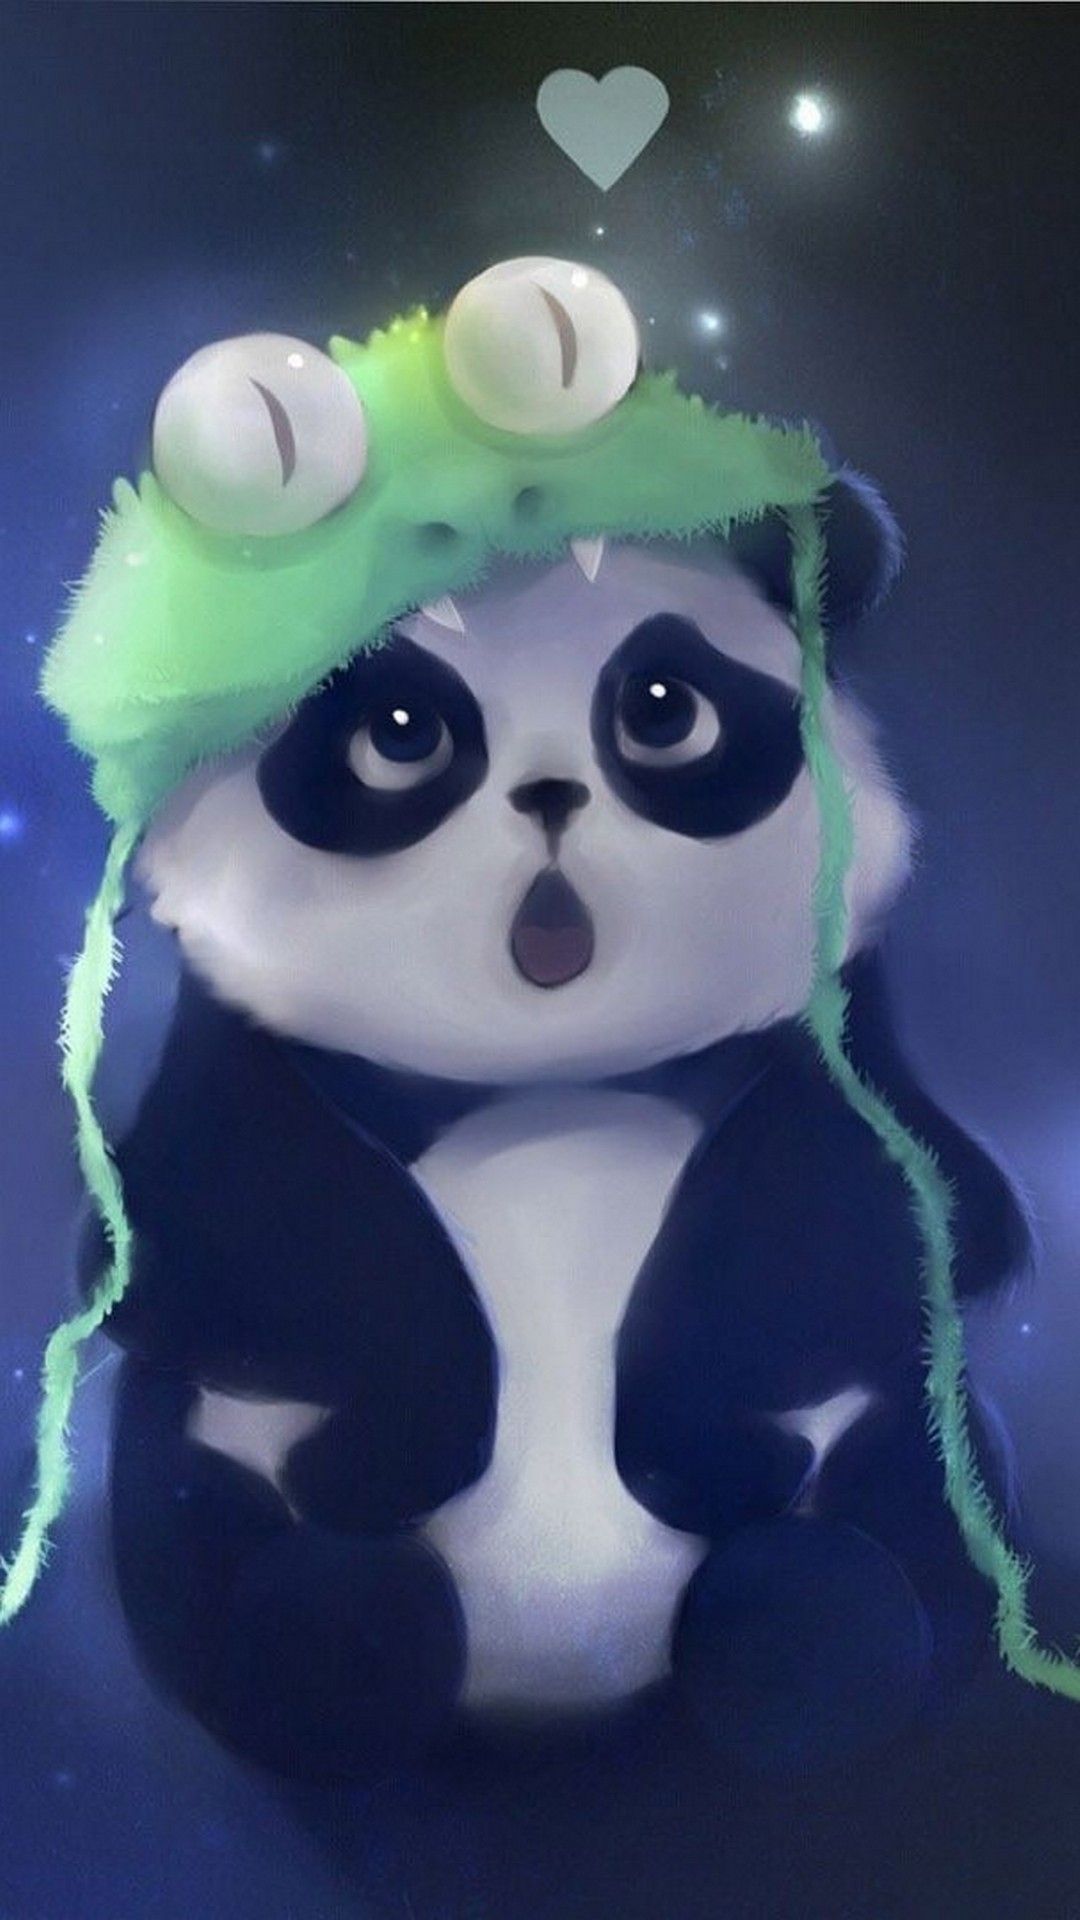 Baby Panda Android Wallpaper - fondos de pantalla de Android 2019